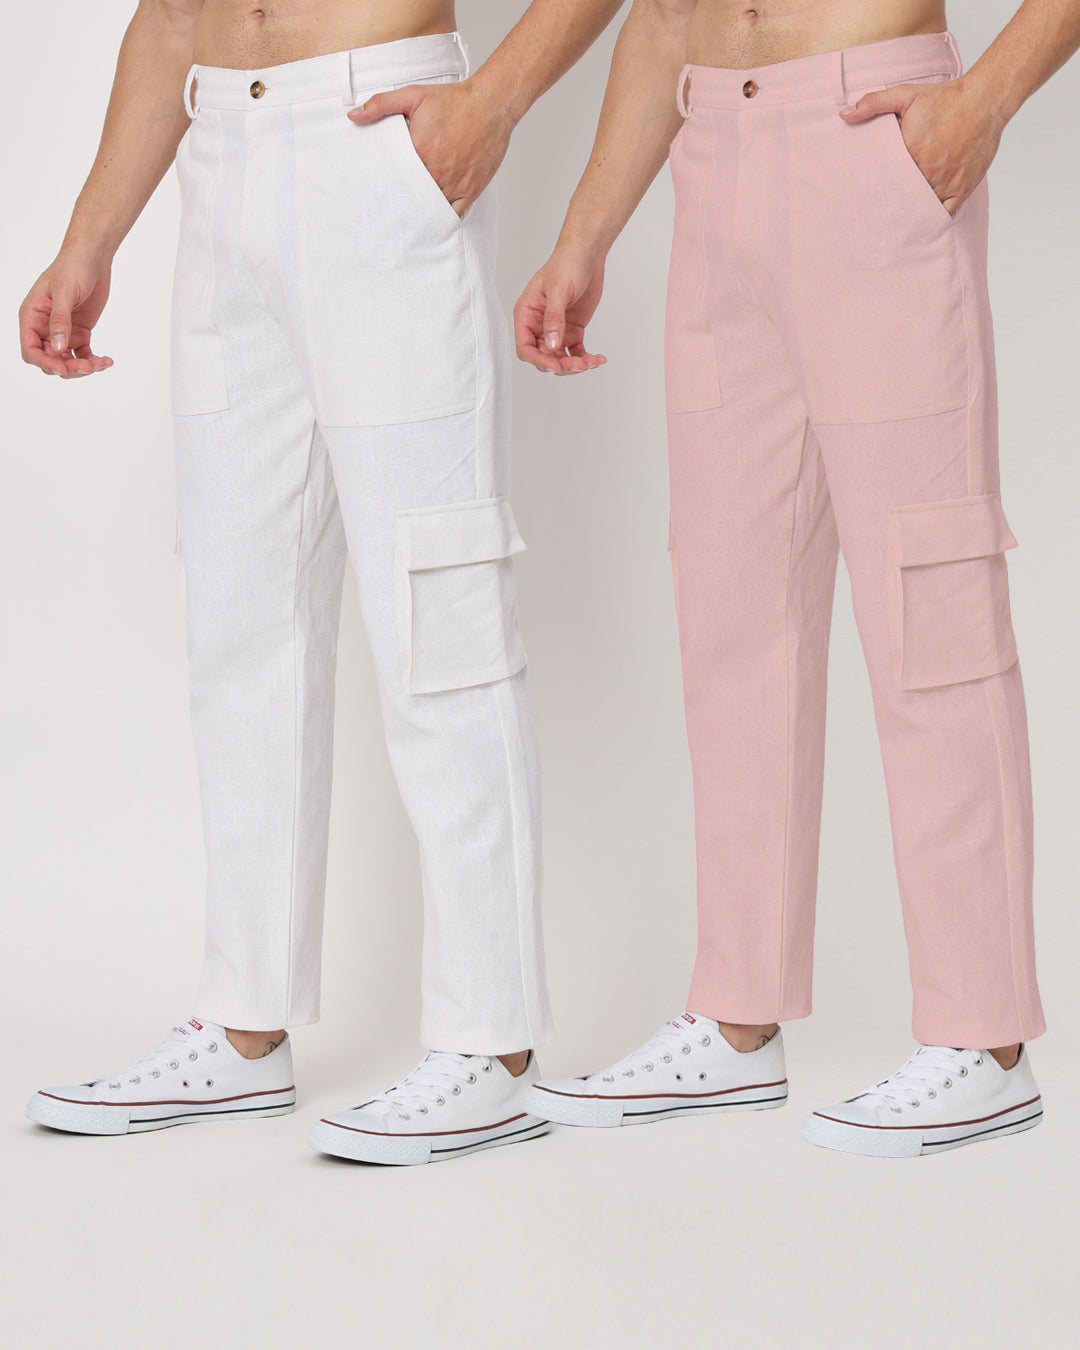 Combo: Function Flex Midnight White & Fondant Pink Men's Pants- Set Of 2